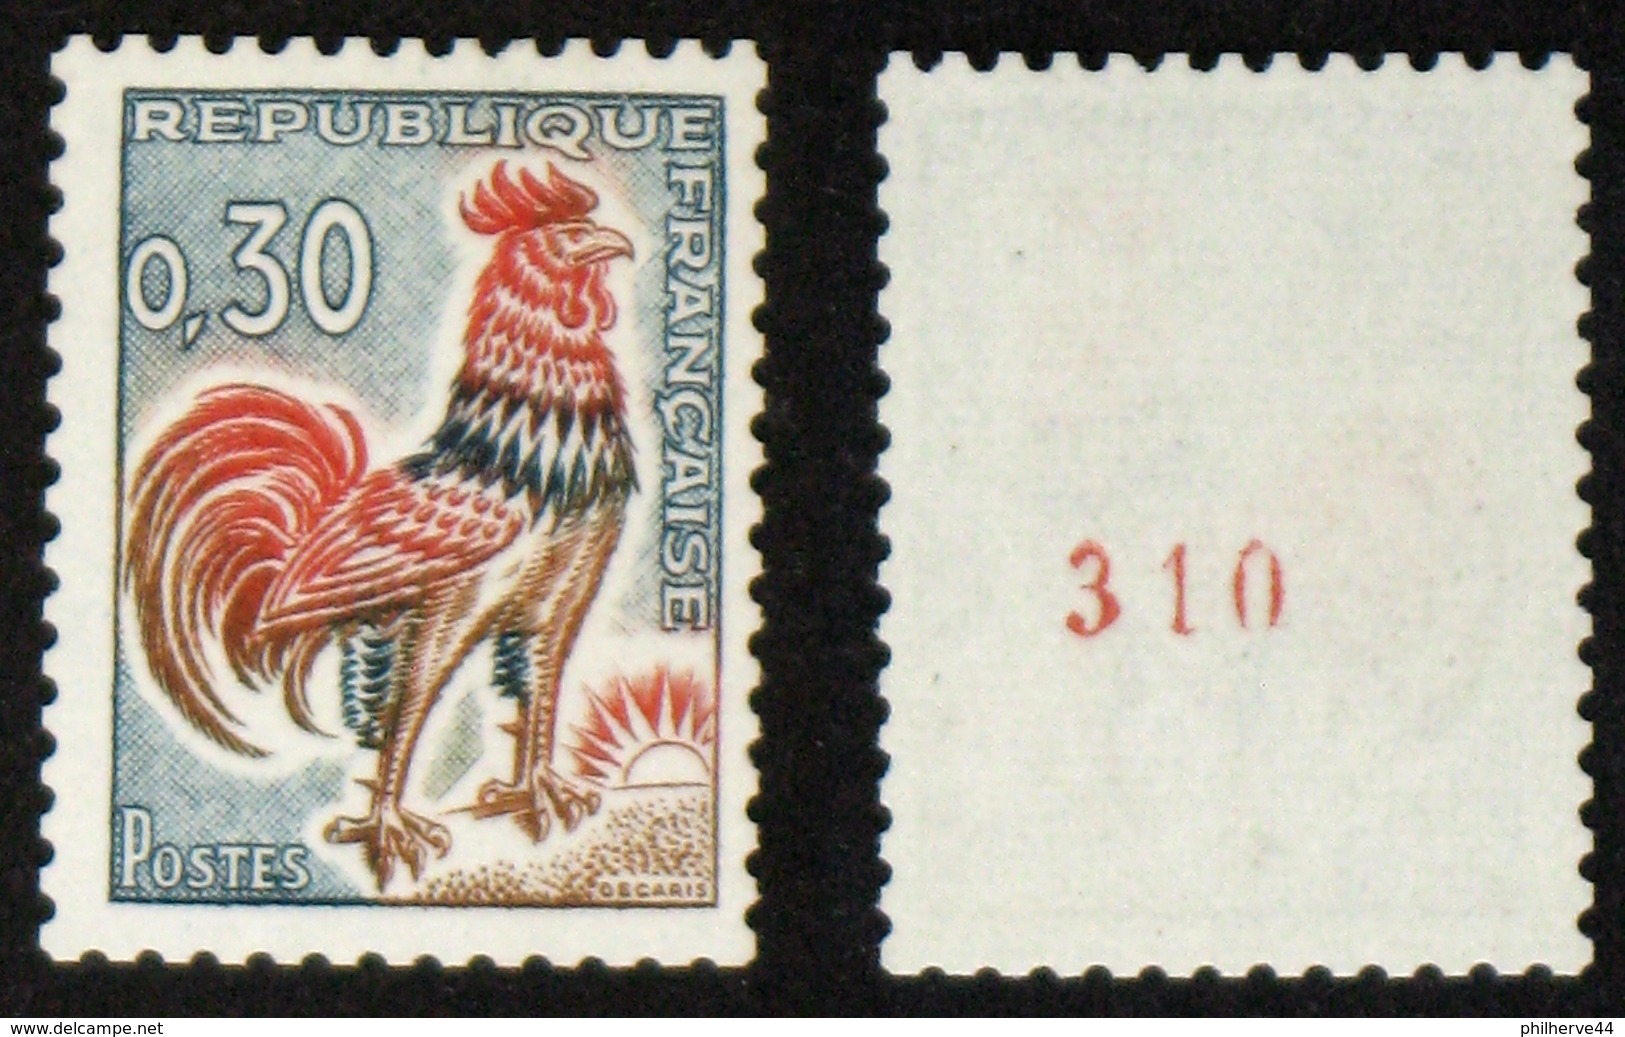 N° 1331Ab 30c COQ Neuf N** N° Rouge Cote 13,5€ - 1962-1965 Gallo De Decaris